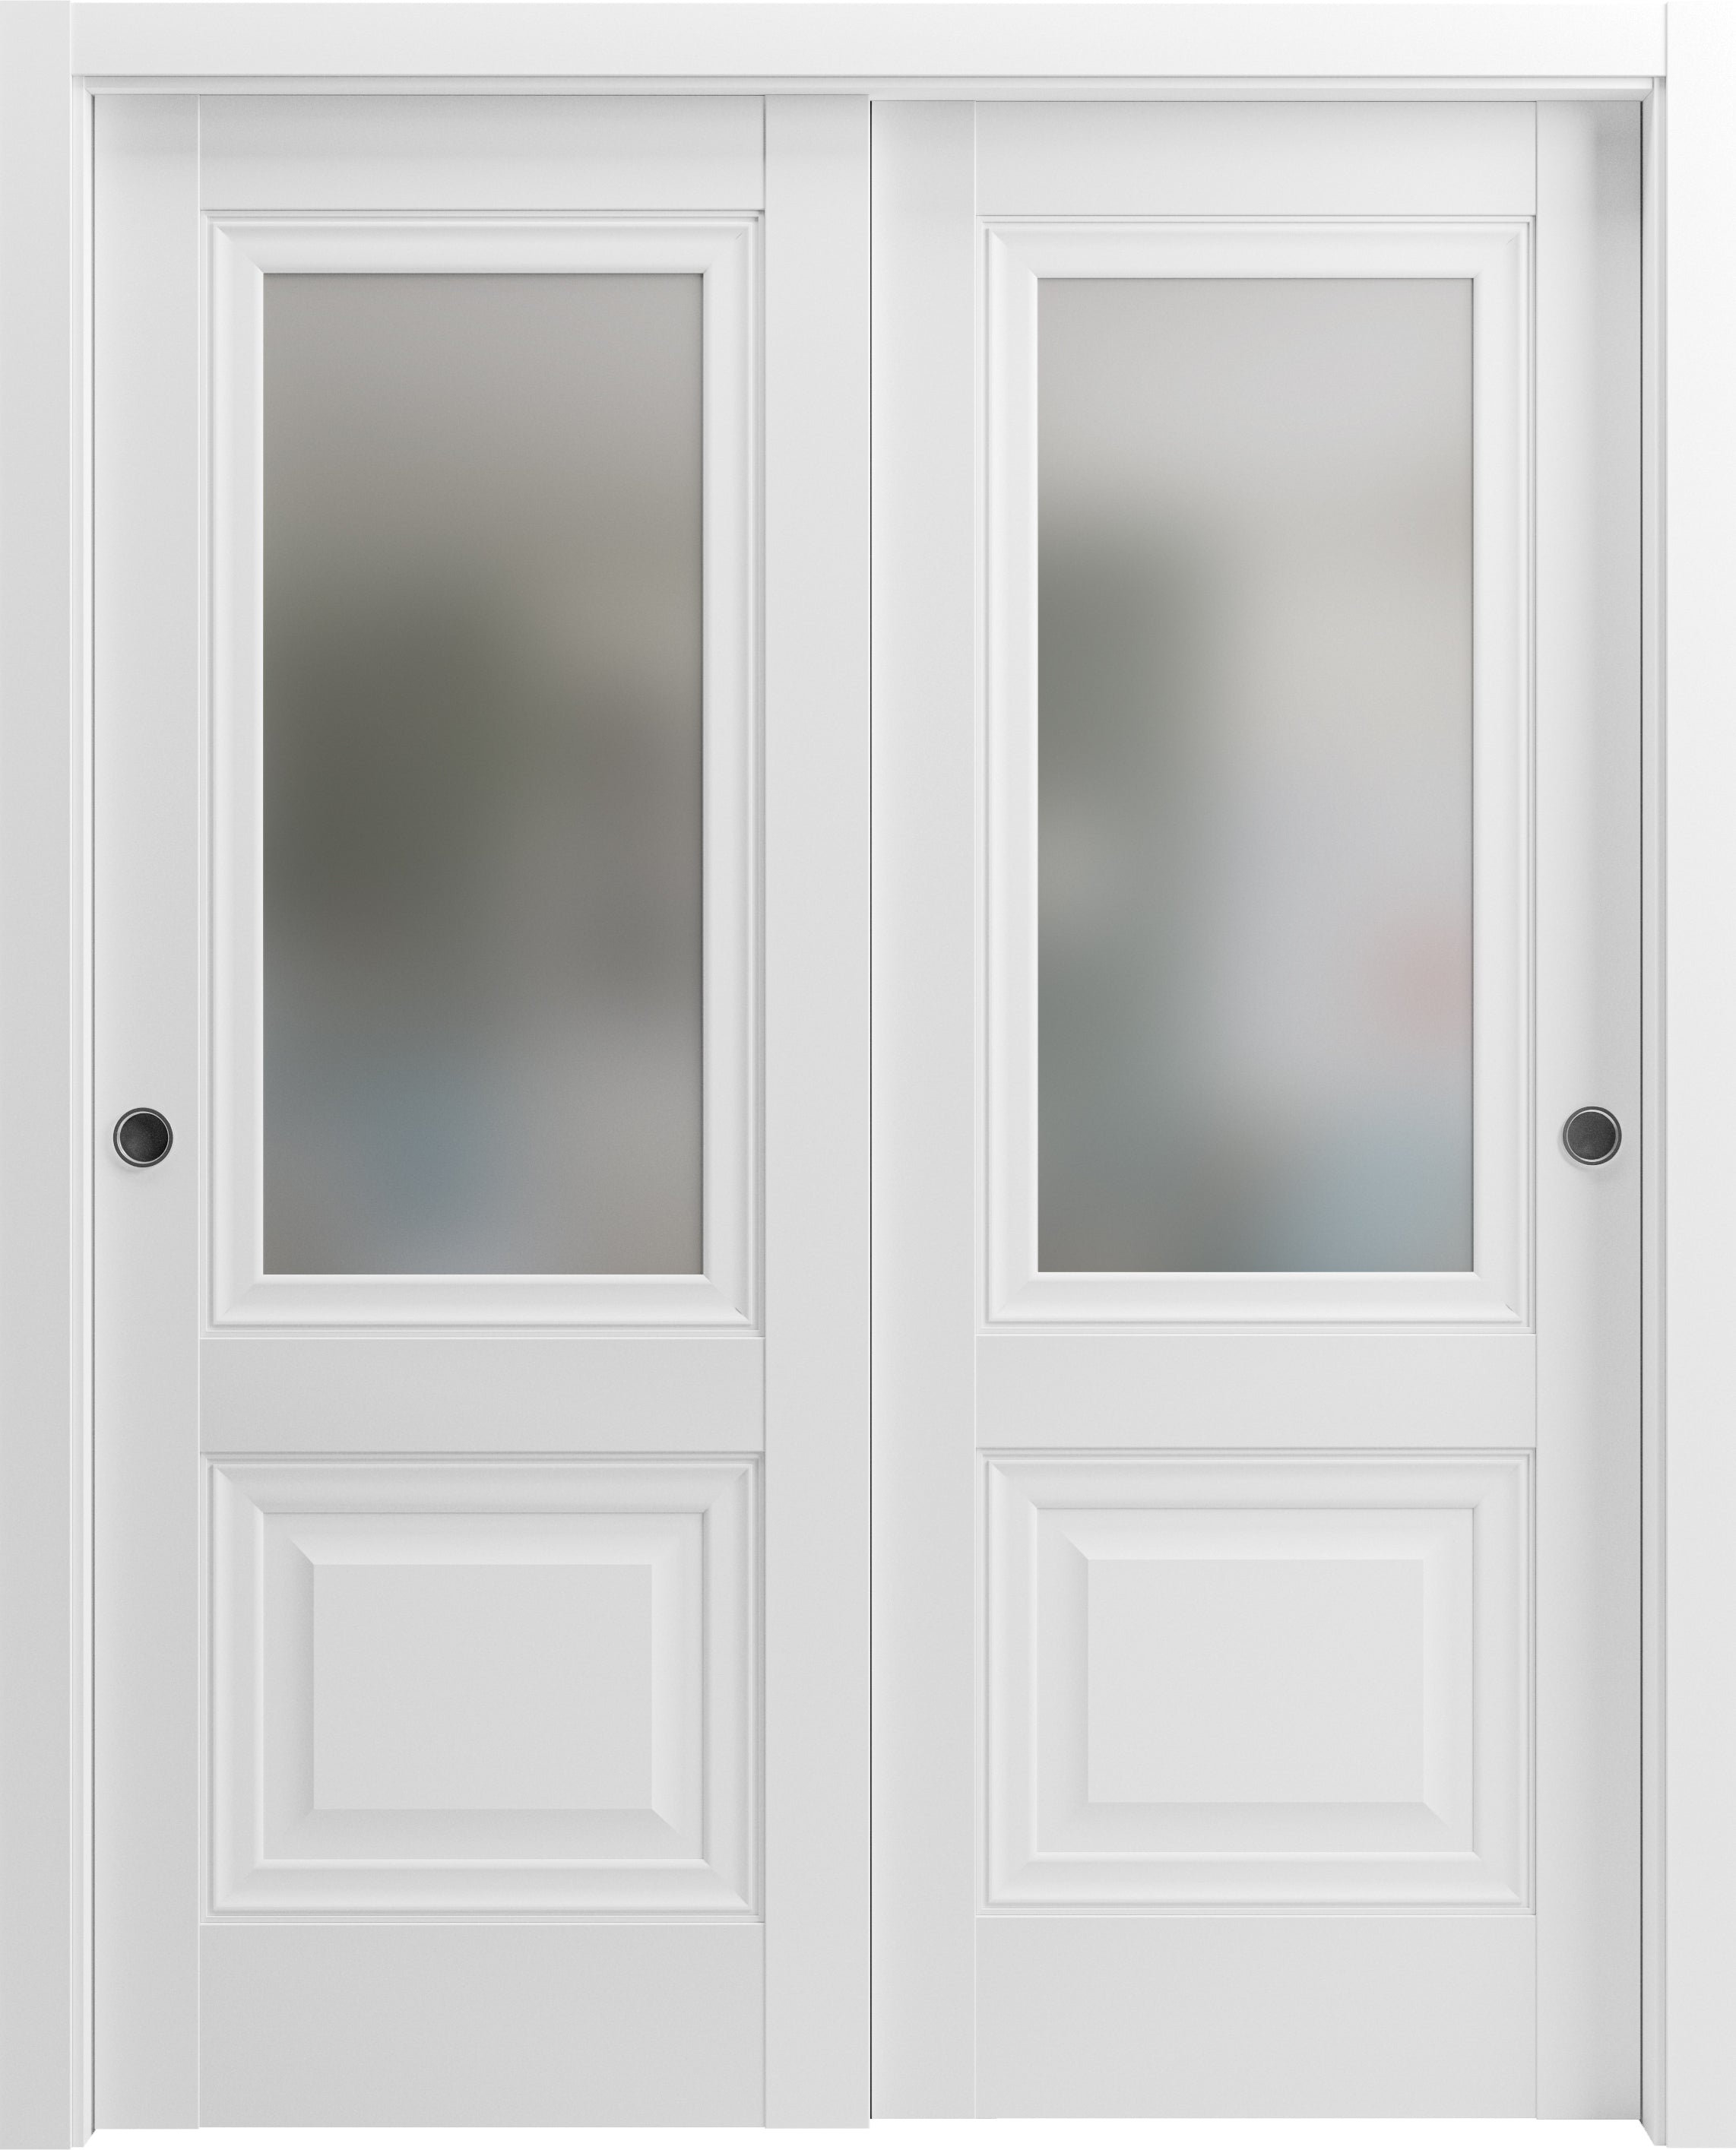 Lace Multi-X Design Bypass Door - Renin